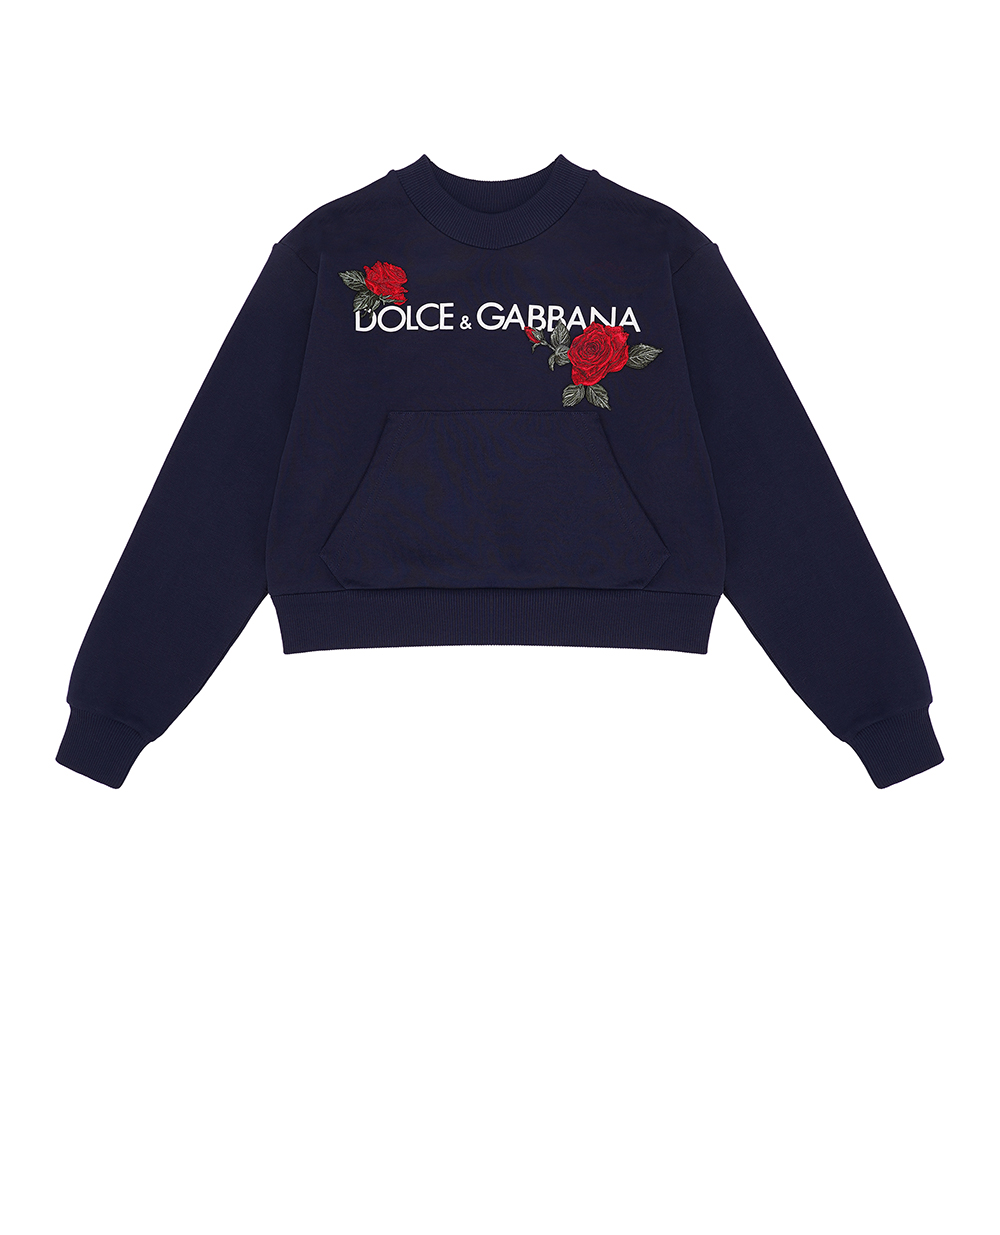 Детский свитшот Dolce&Gabbana Kids L5JW9A-G7J7V-B, темно-синий цвет • Купить в интернет-магазине Kameron